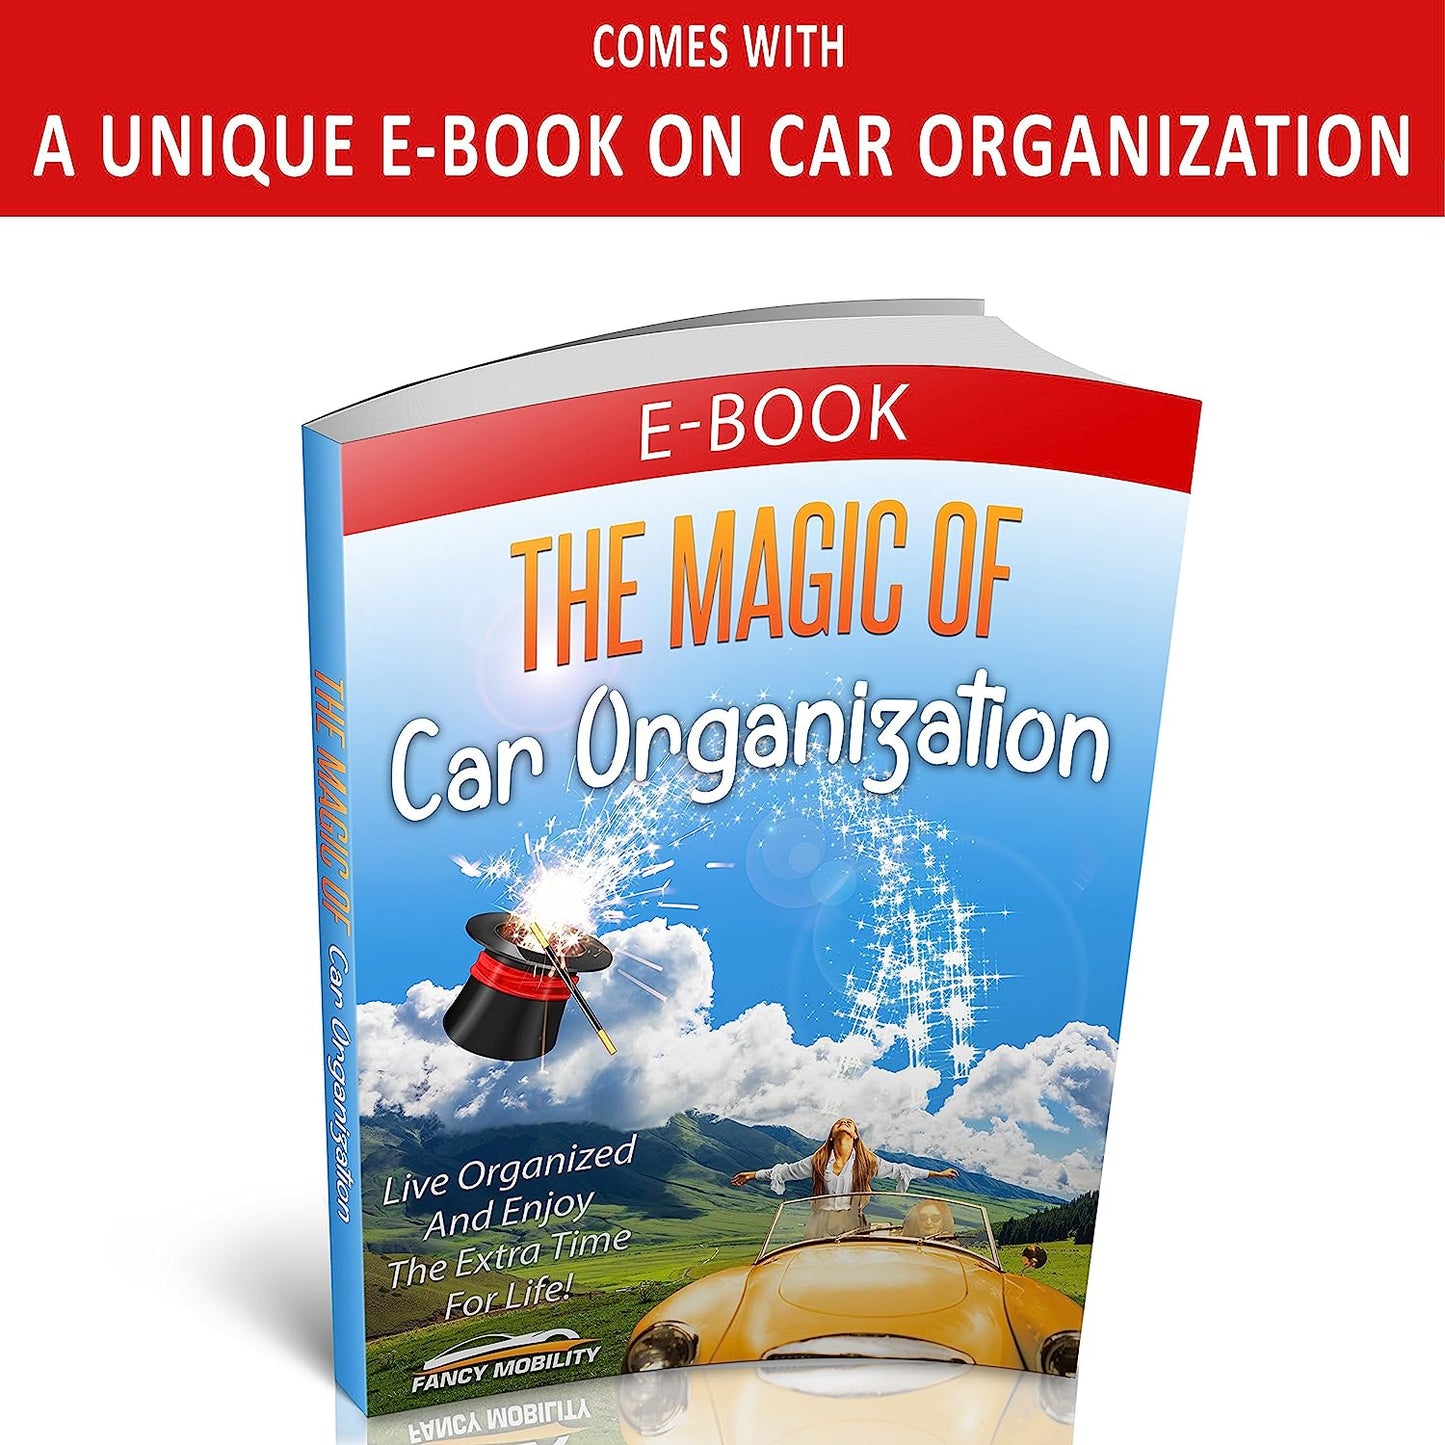 The Magic of Car Organization